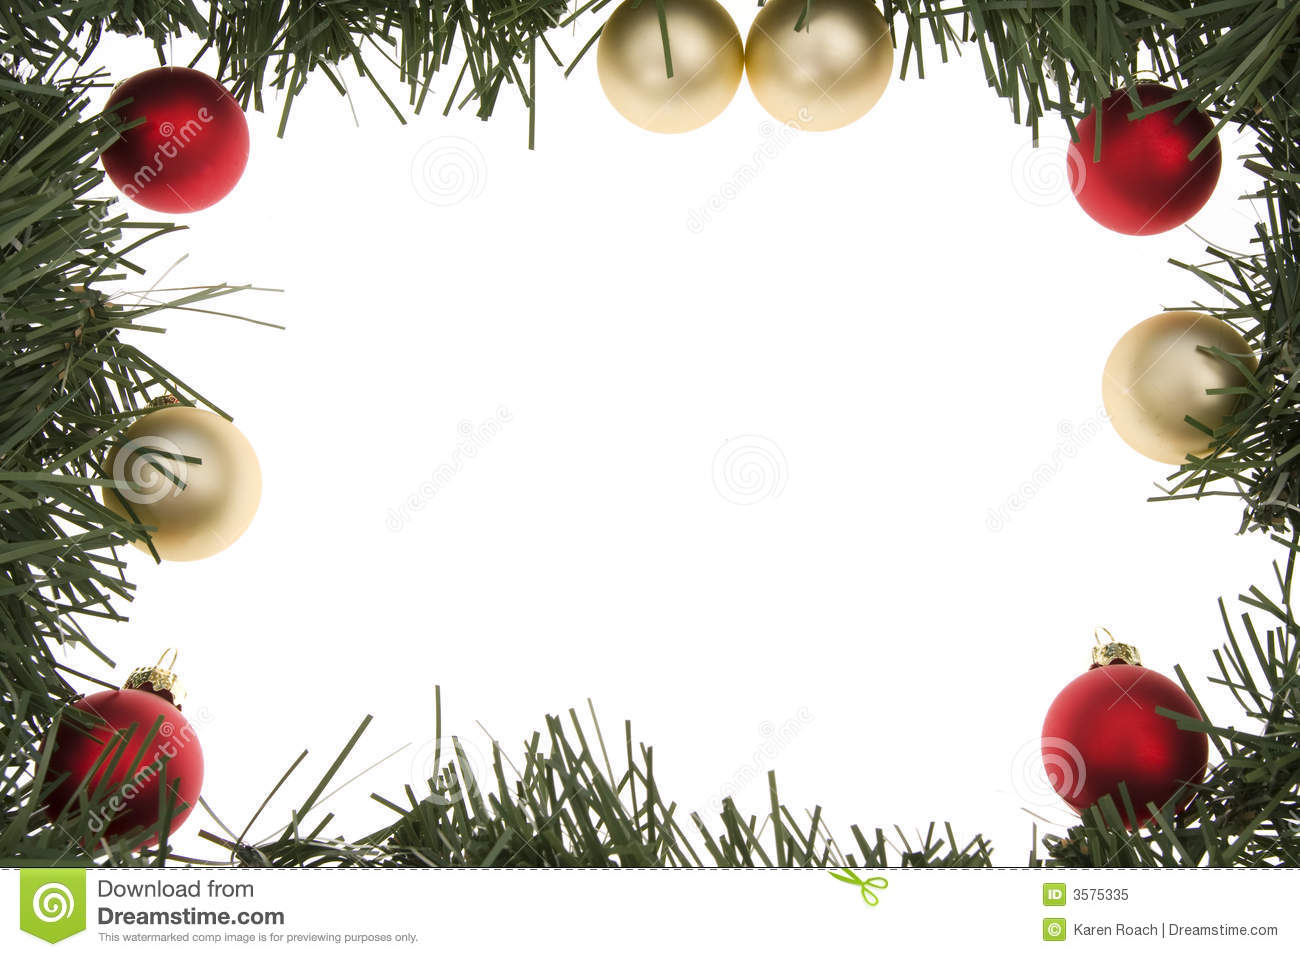 Christmas Wreath Frame Royalty Free Stock Photo   Image  3575335